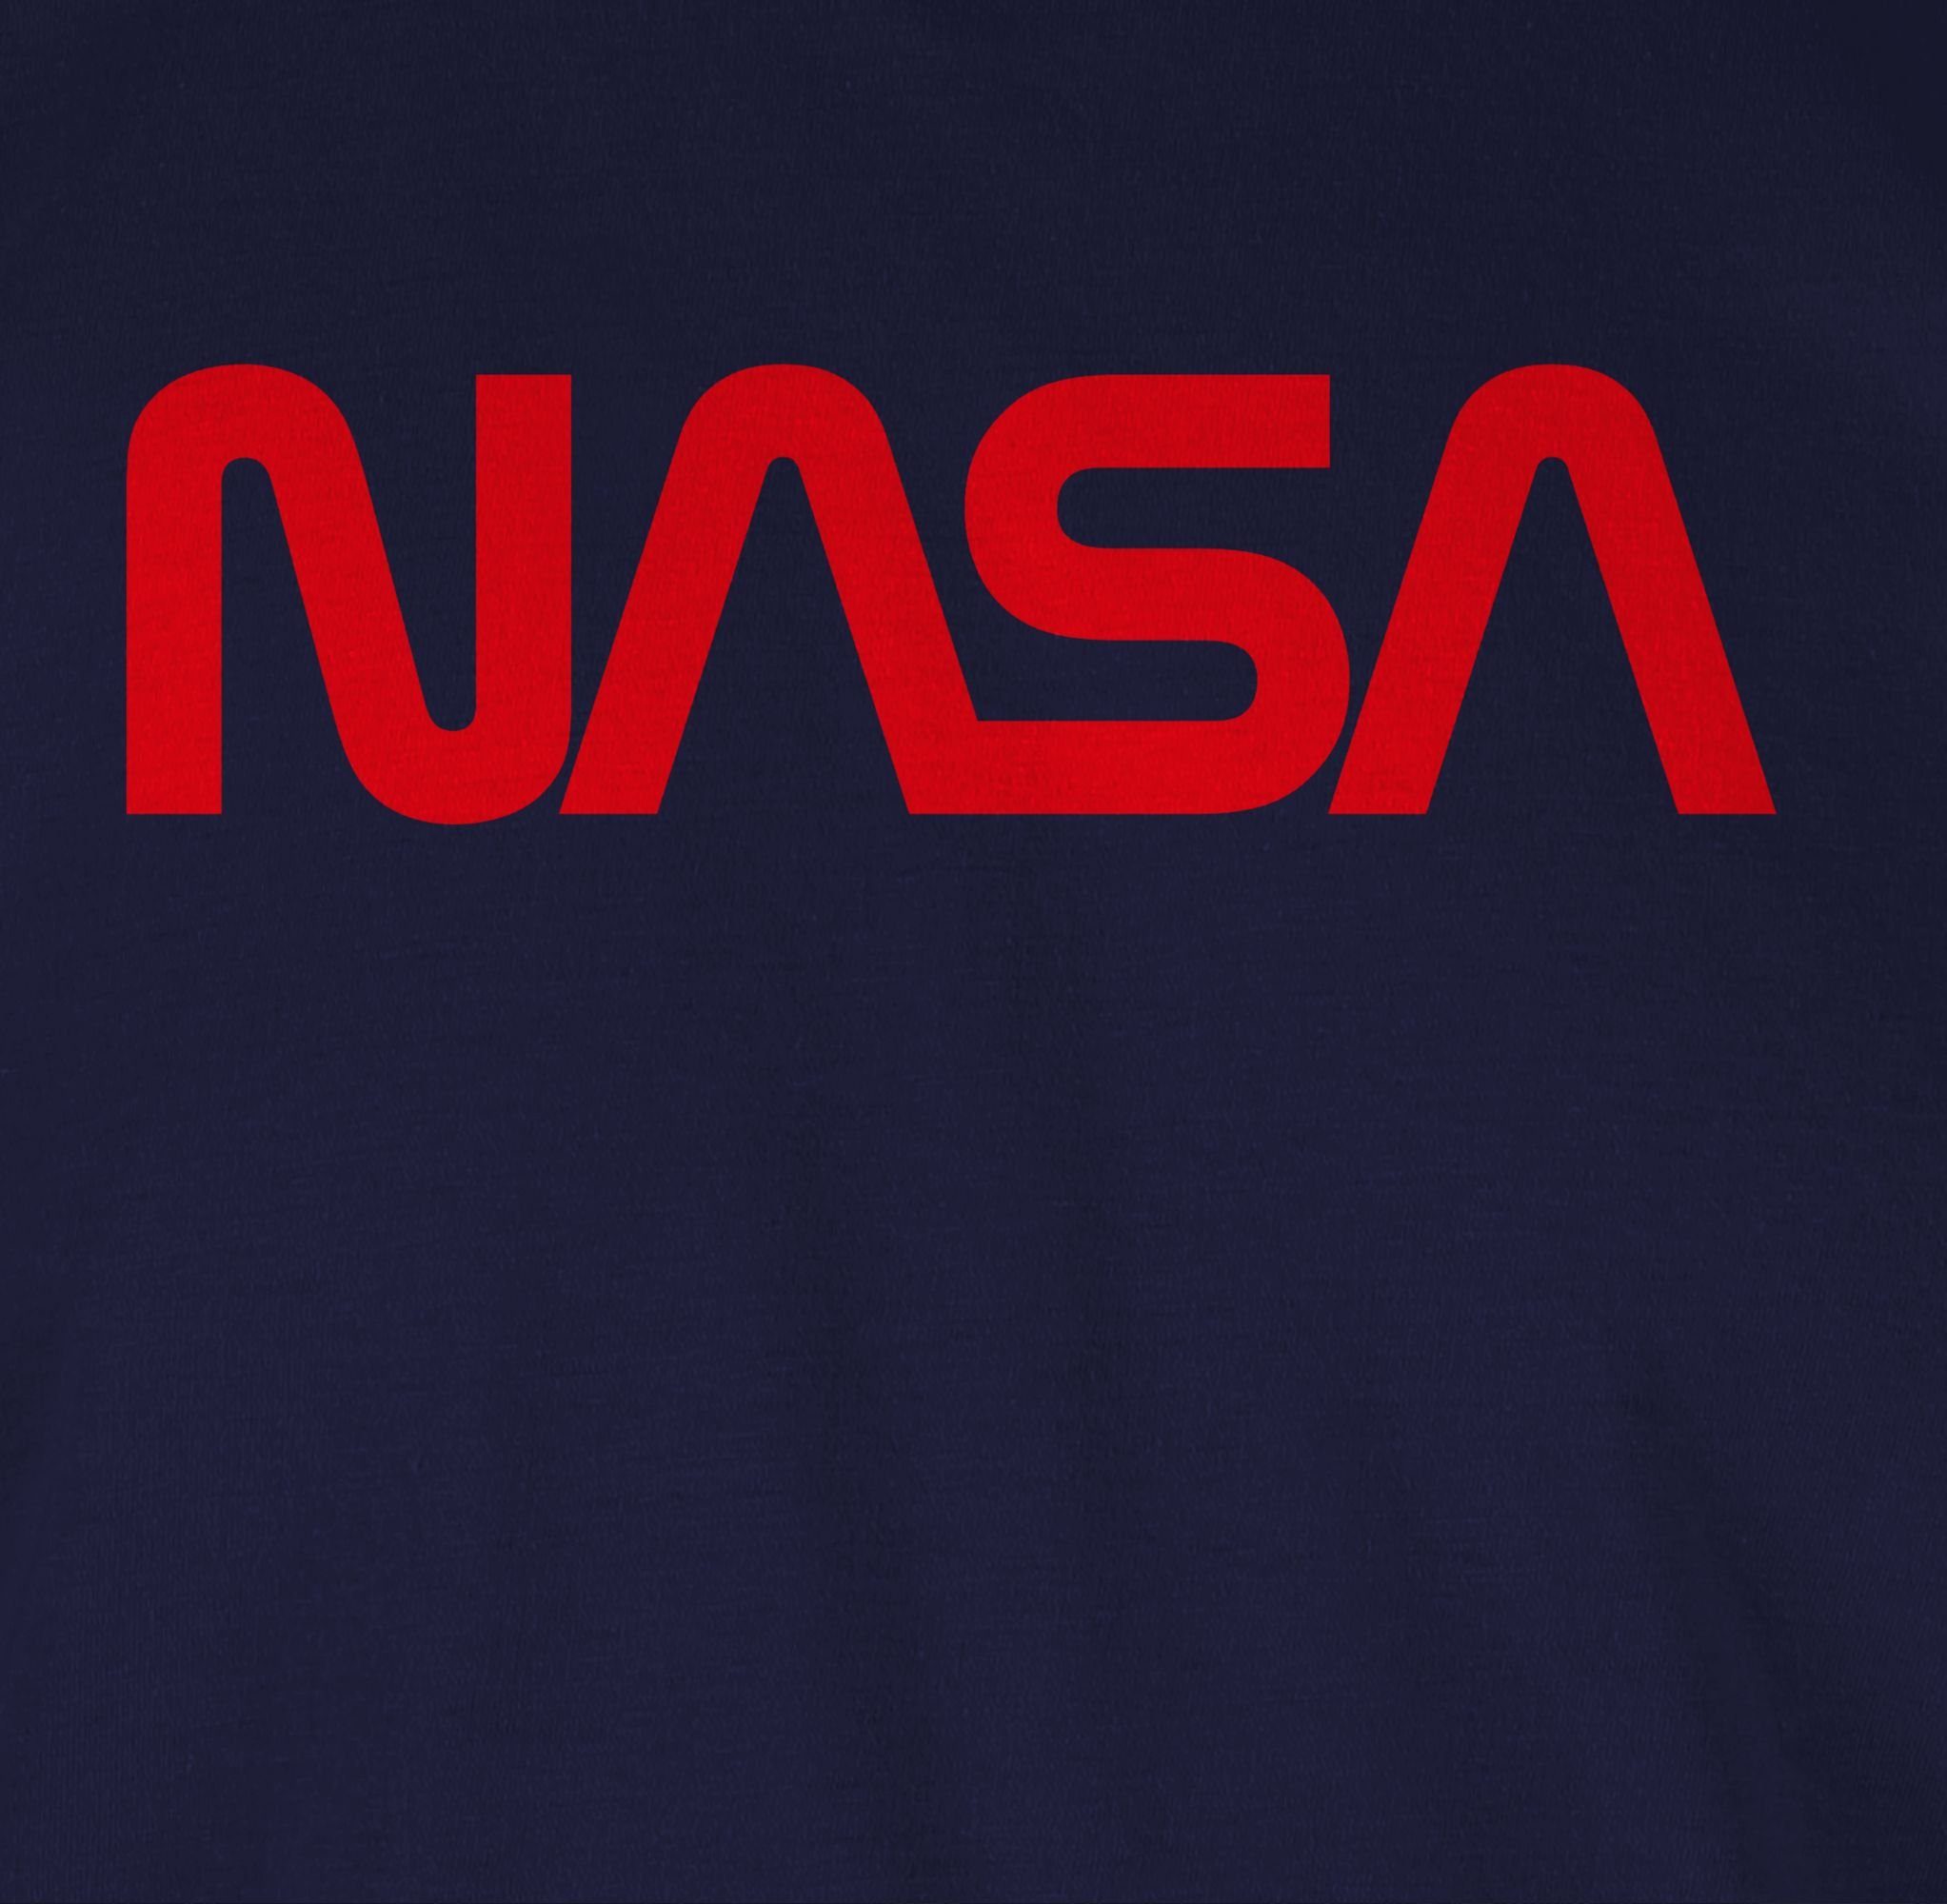 Blau Weltraum Navy Geschenke 1 Rundhalsshirt Raumfahrt - Astronaut Mondlandung Nasa Nerd Shirtracer